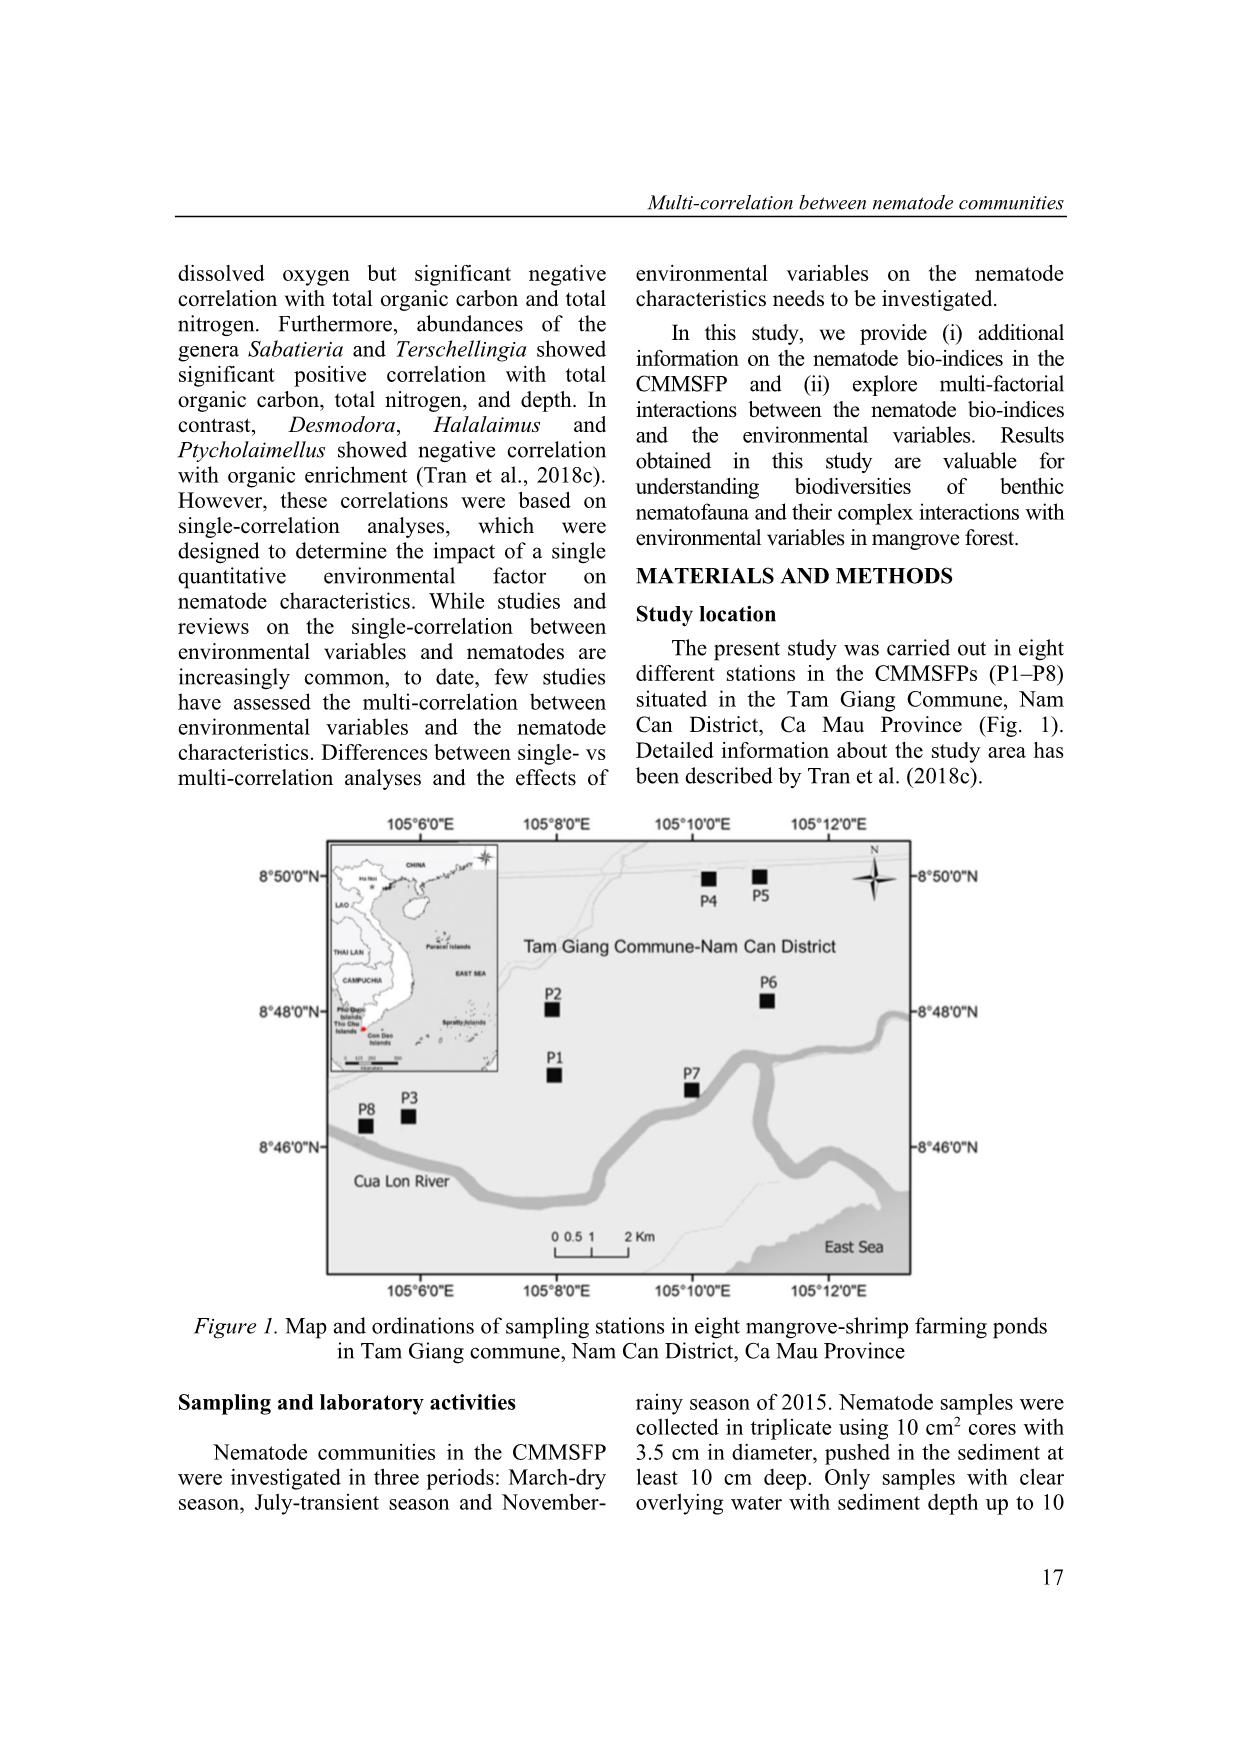 Multi-correlation between nematode communities and environmental variables in mangrove-shrimp ponds, Ca Mau province, Southern Vietnam trang 3